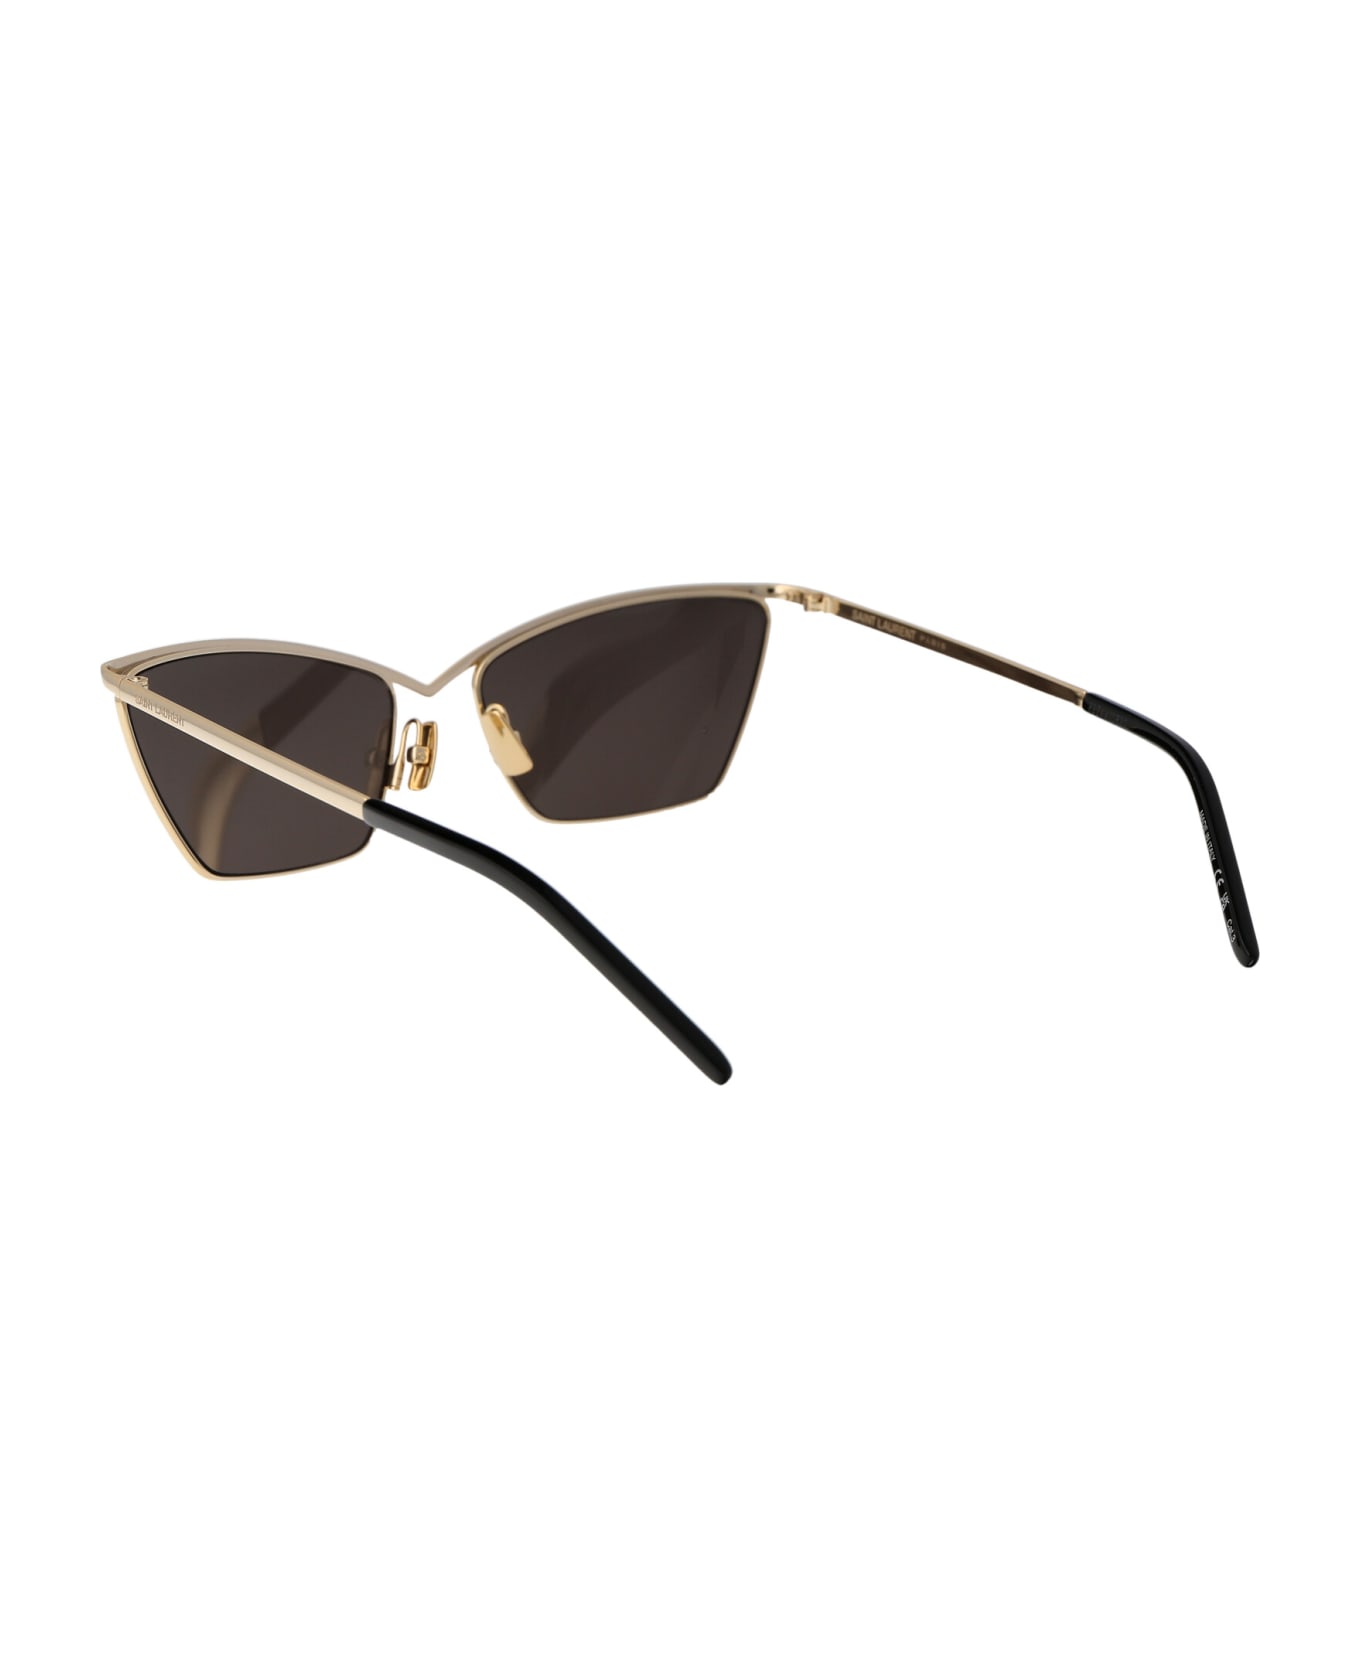 Saint Laurent Eyewear Sl 637 Sunglasses - 003 GOLD GOLD BLACK サングラス